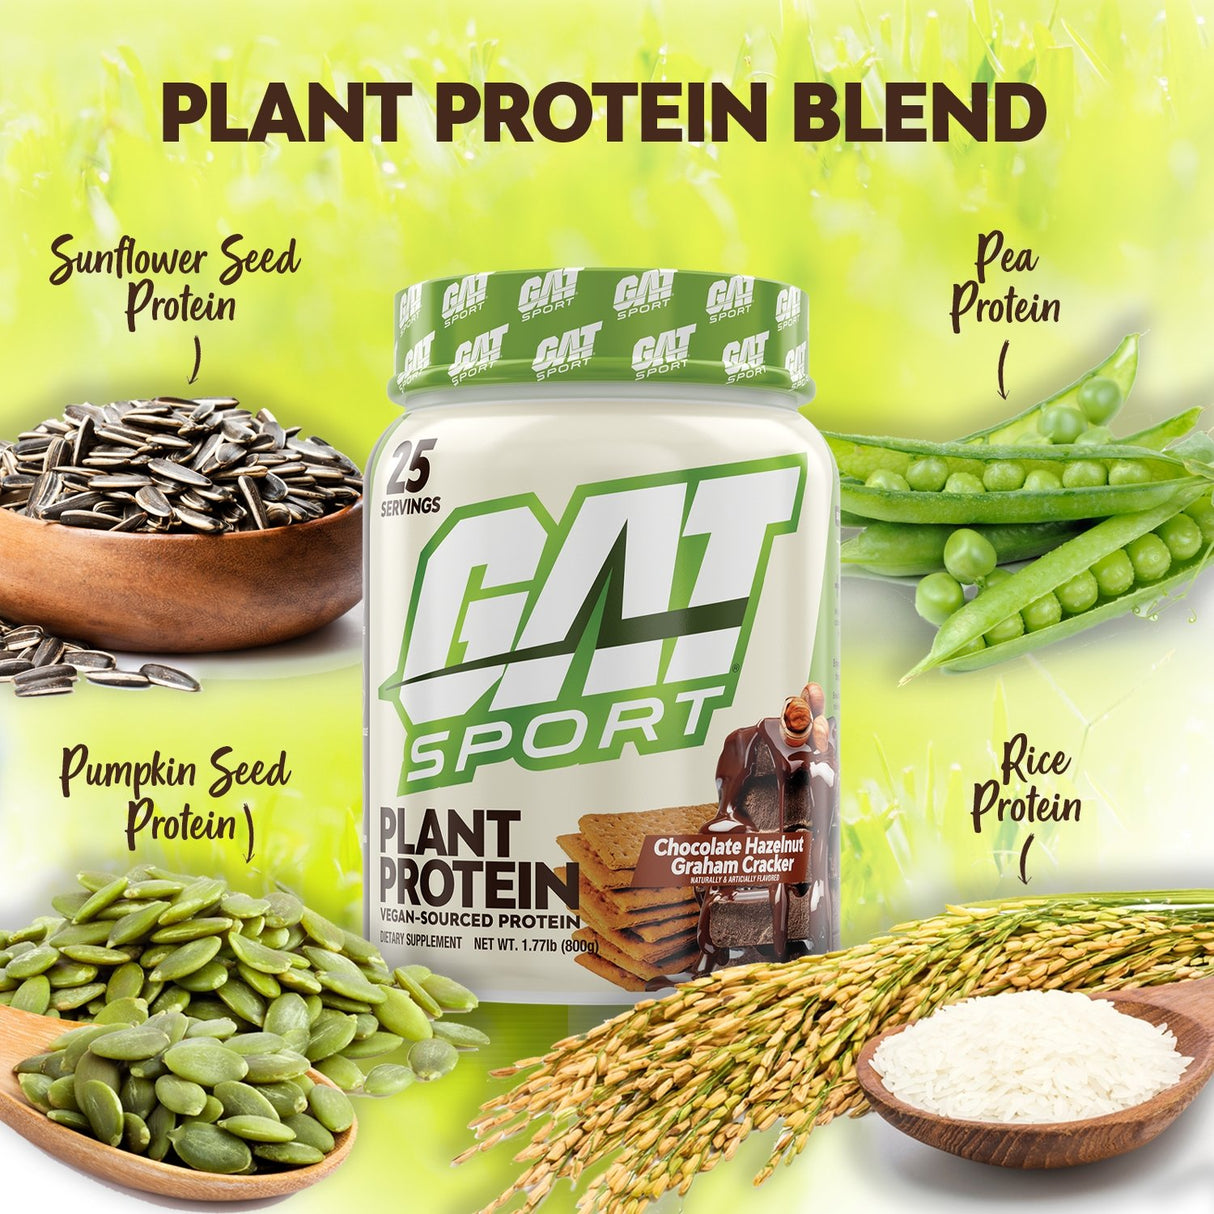 GAT SPORT Plant Protein - plant protein blend